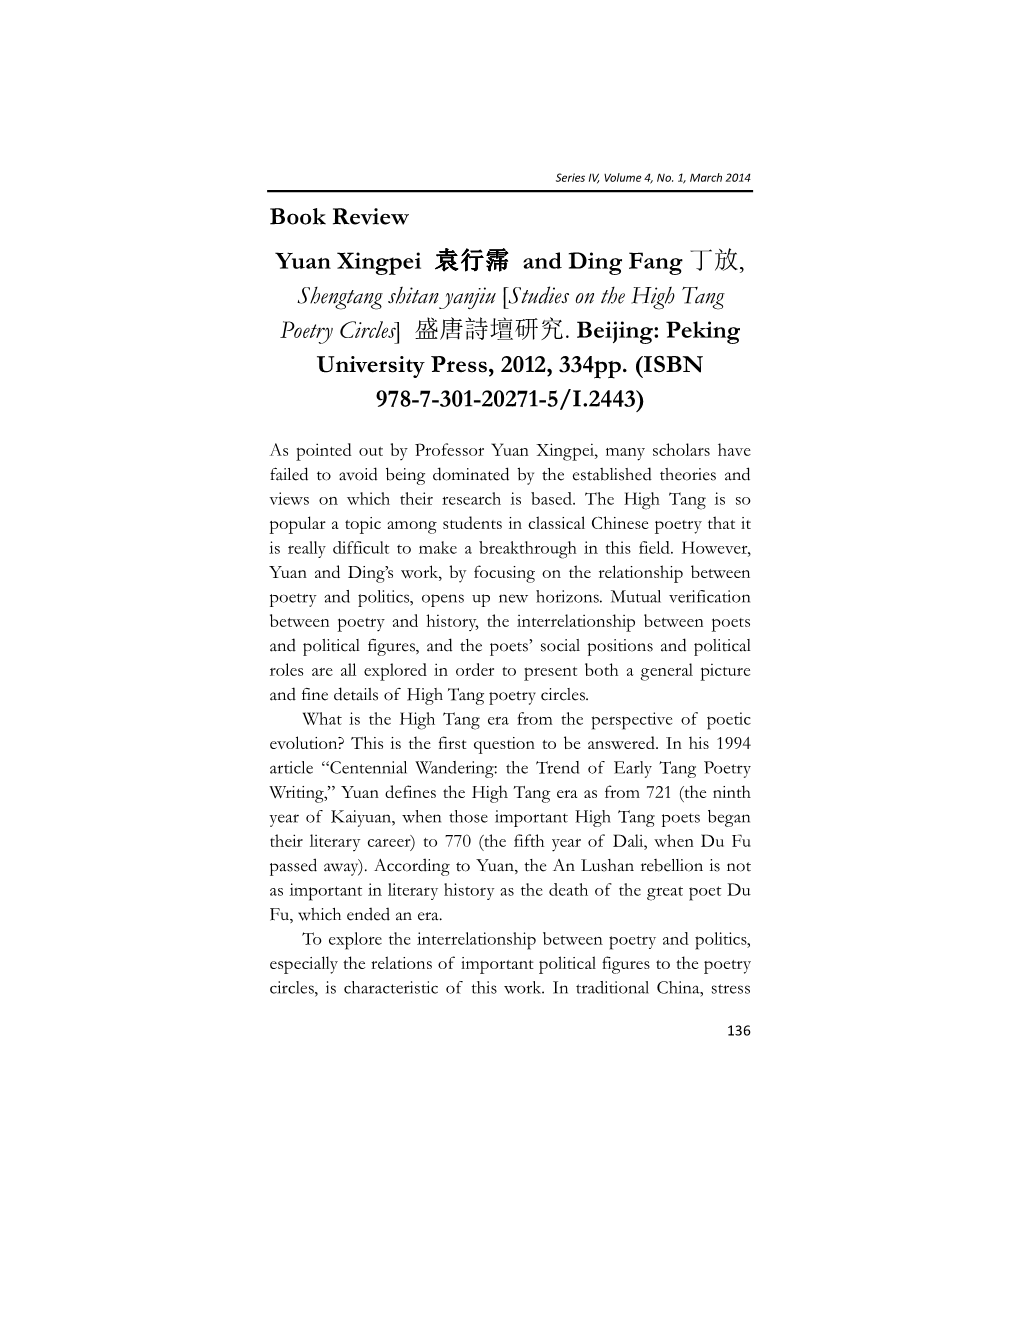 Book Review Yuan Xingpei 袁行霈 and Ding Fang 丁放, Shengtang Shitan Yanjiu [Studies on the High Tang Poetry Circles ] 盛唐詩壇研究